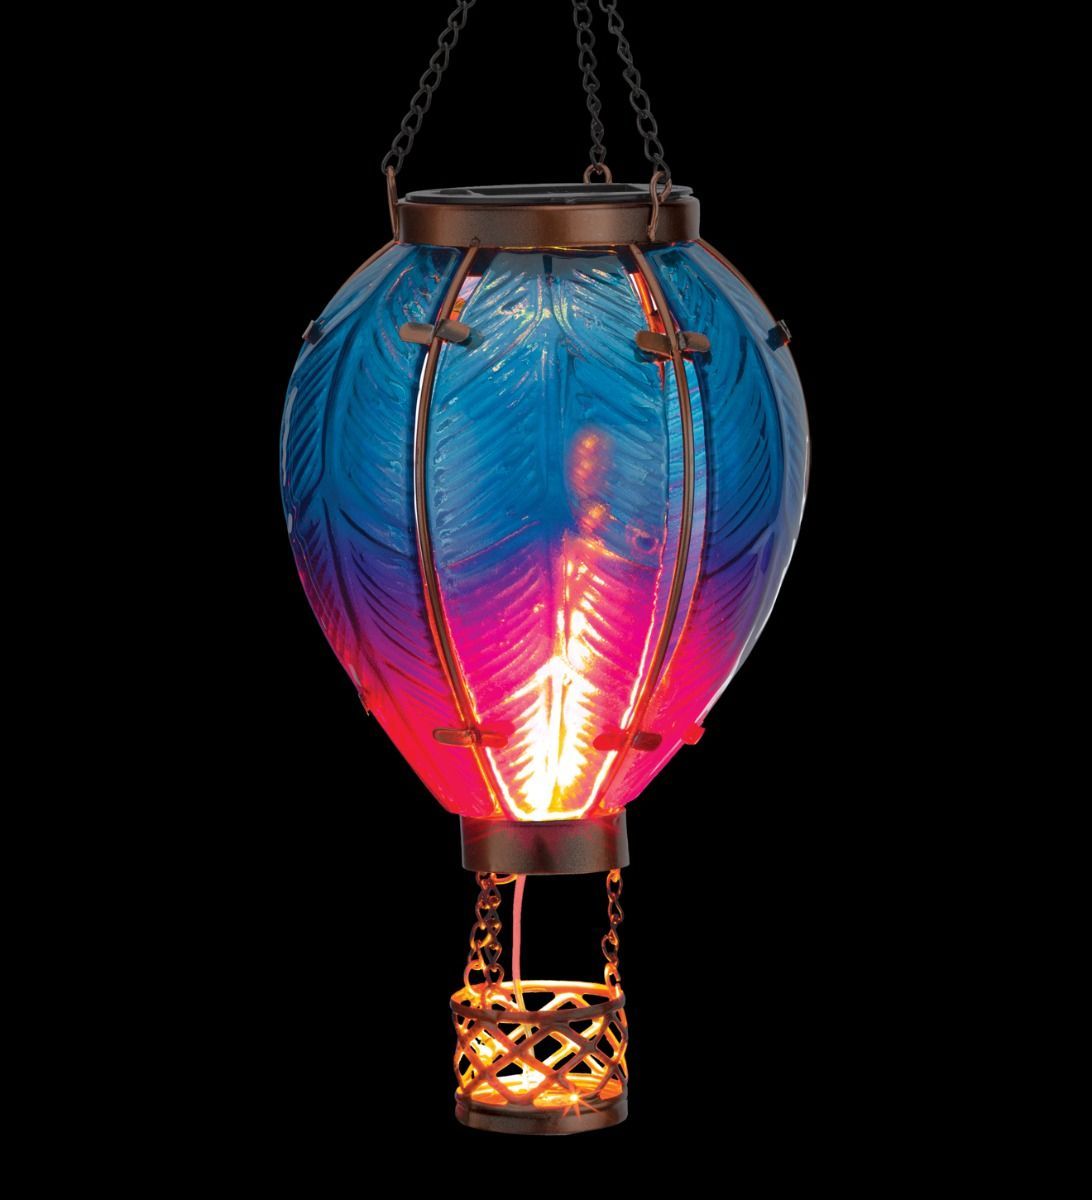 https://www.songbirdgarden.com/store/ProdImages/ProdImages_Extra/25477_12767-1-Hot-Air-Balloon-Outdoor-Hanging-Solar-LED-Lantern-Blue.jpg